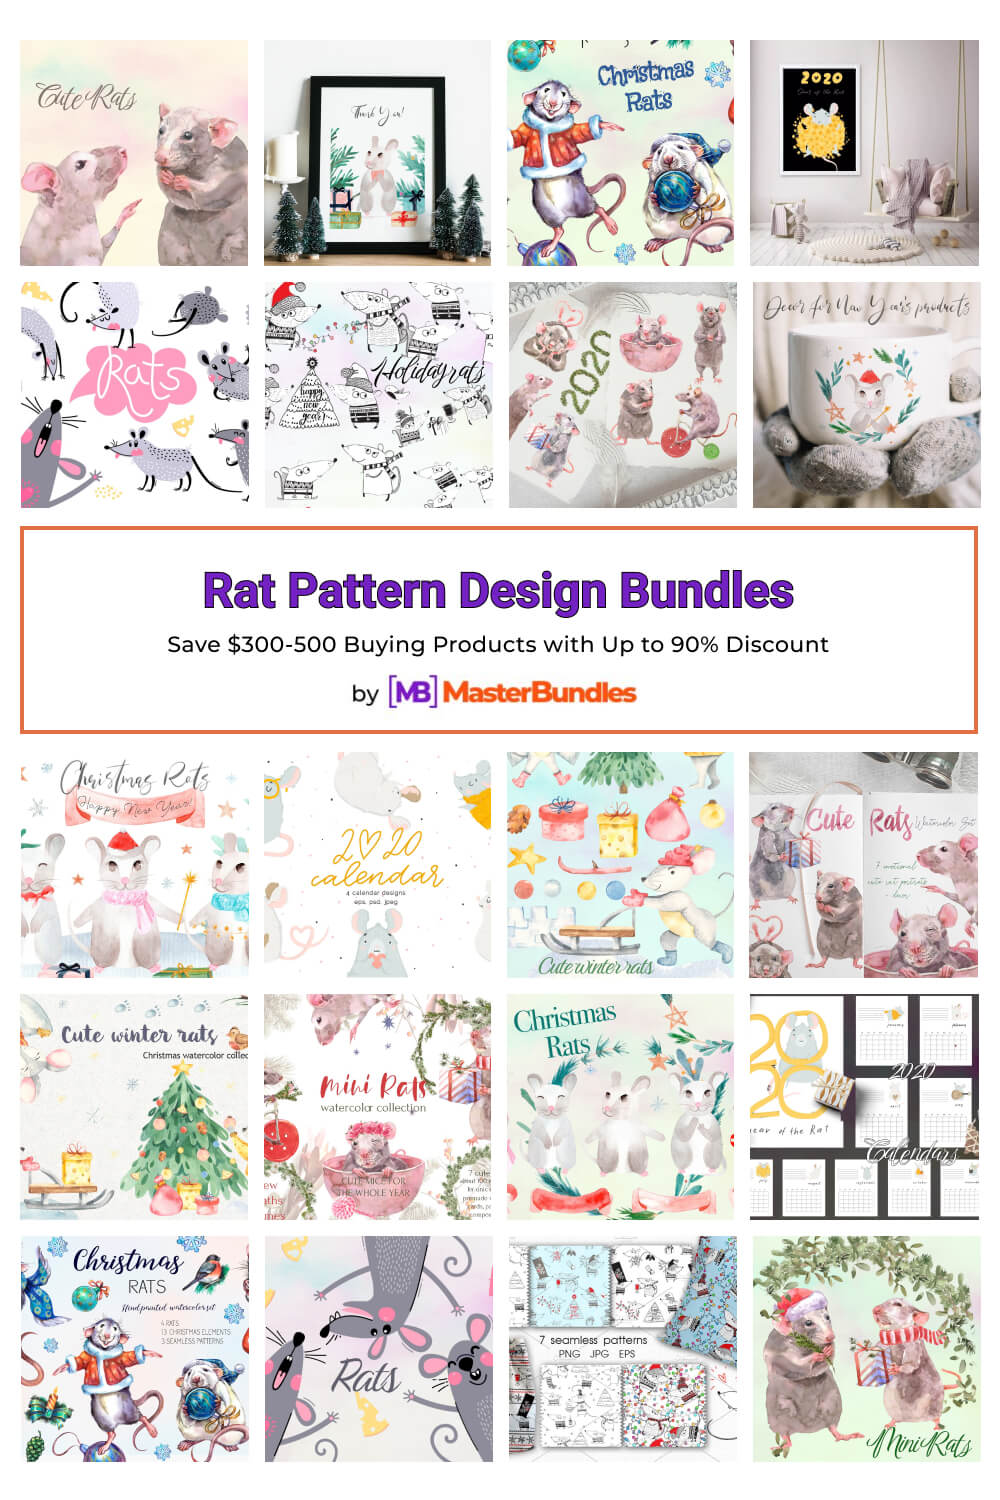 rat pattern design bundles pinterest image.